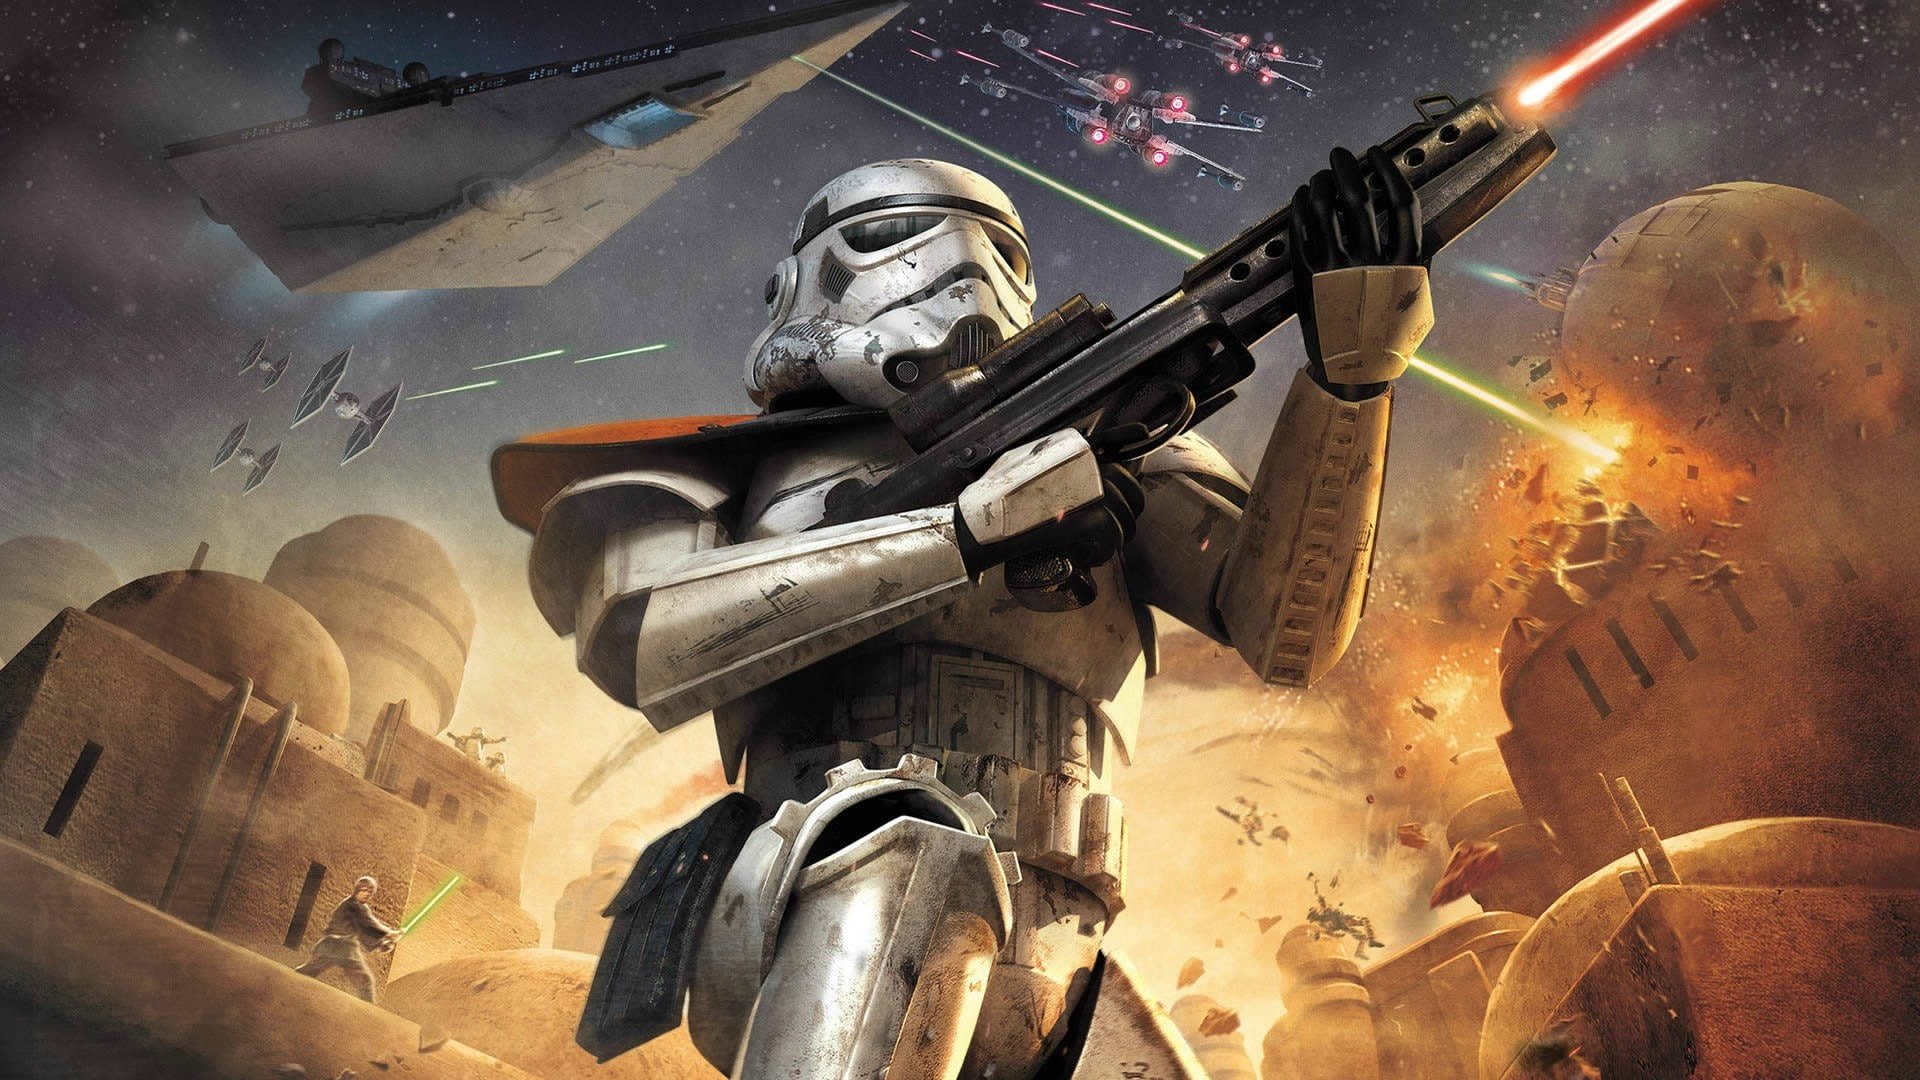 Digital Art, Star Wars, Star Wars: Battlefront, Video Games, Stormtrooper, storm trooper star wars